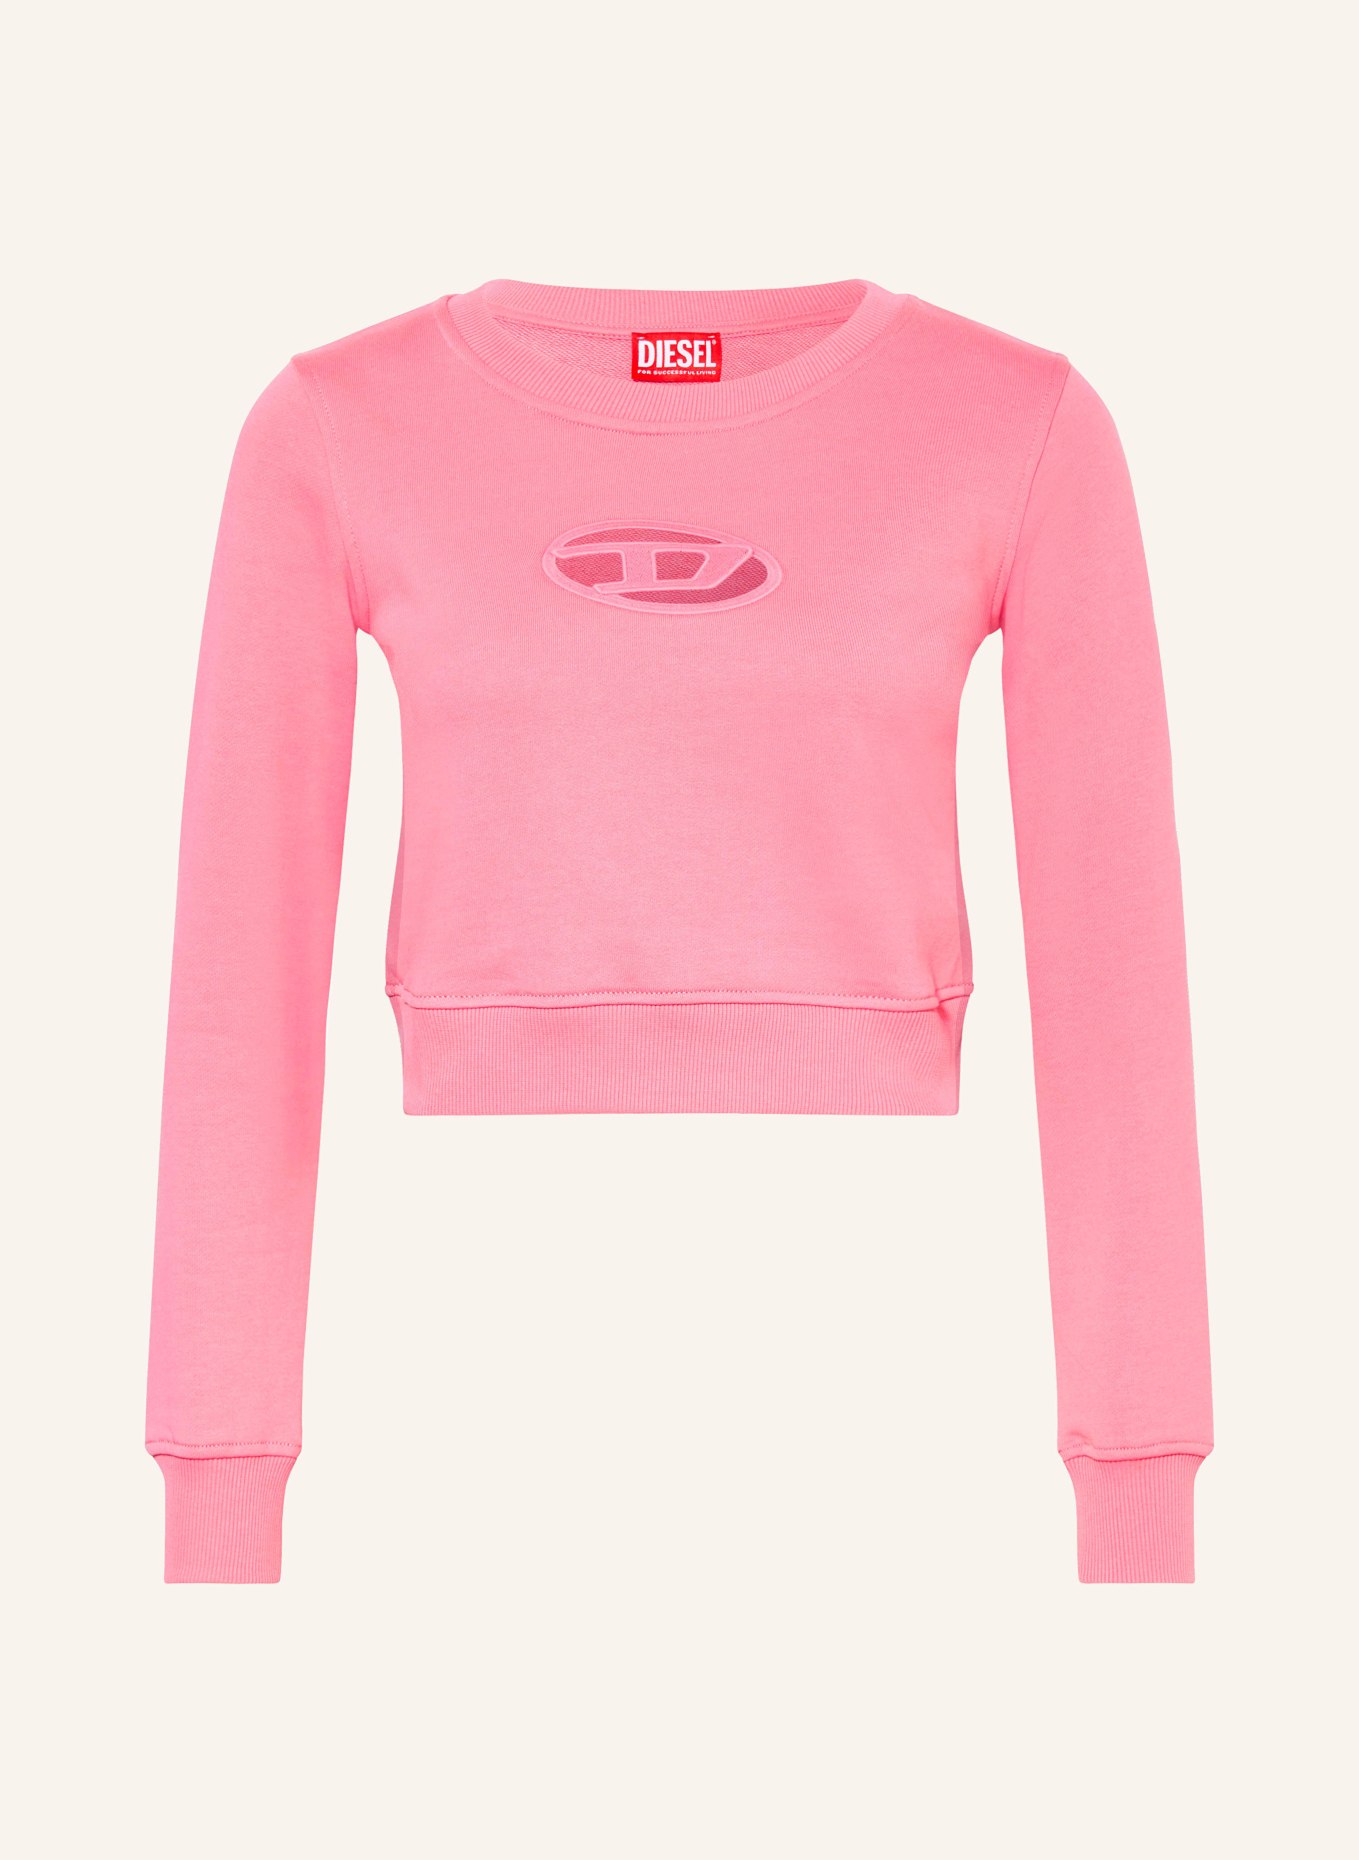 DIESEL Cropped-Sweatshirt F-SLIMMY-OD, Farbe: PINK (Bild 1)